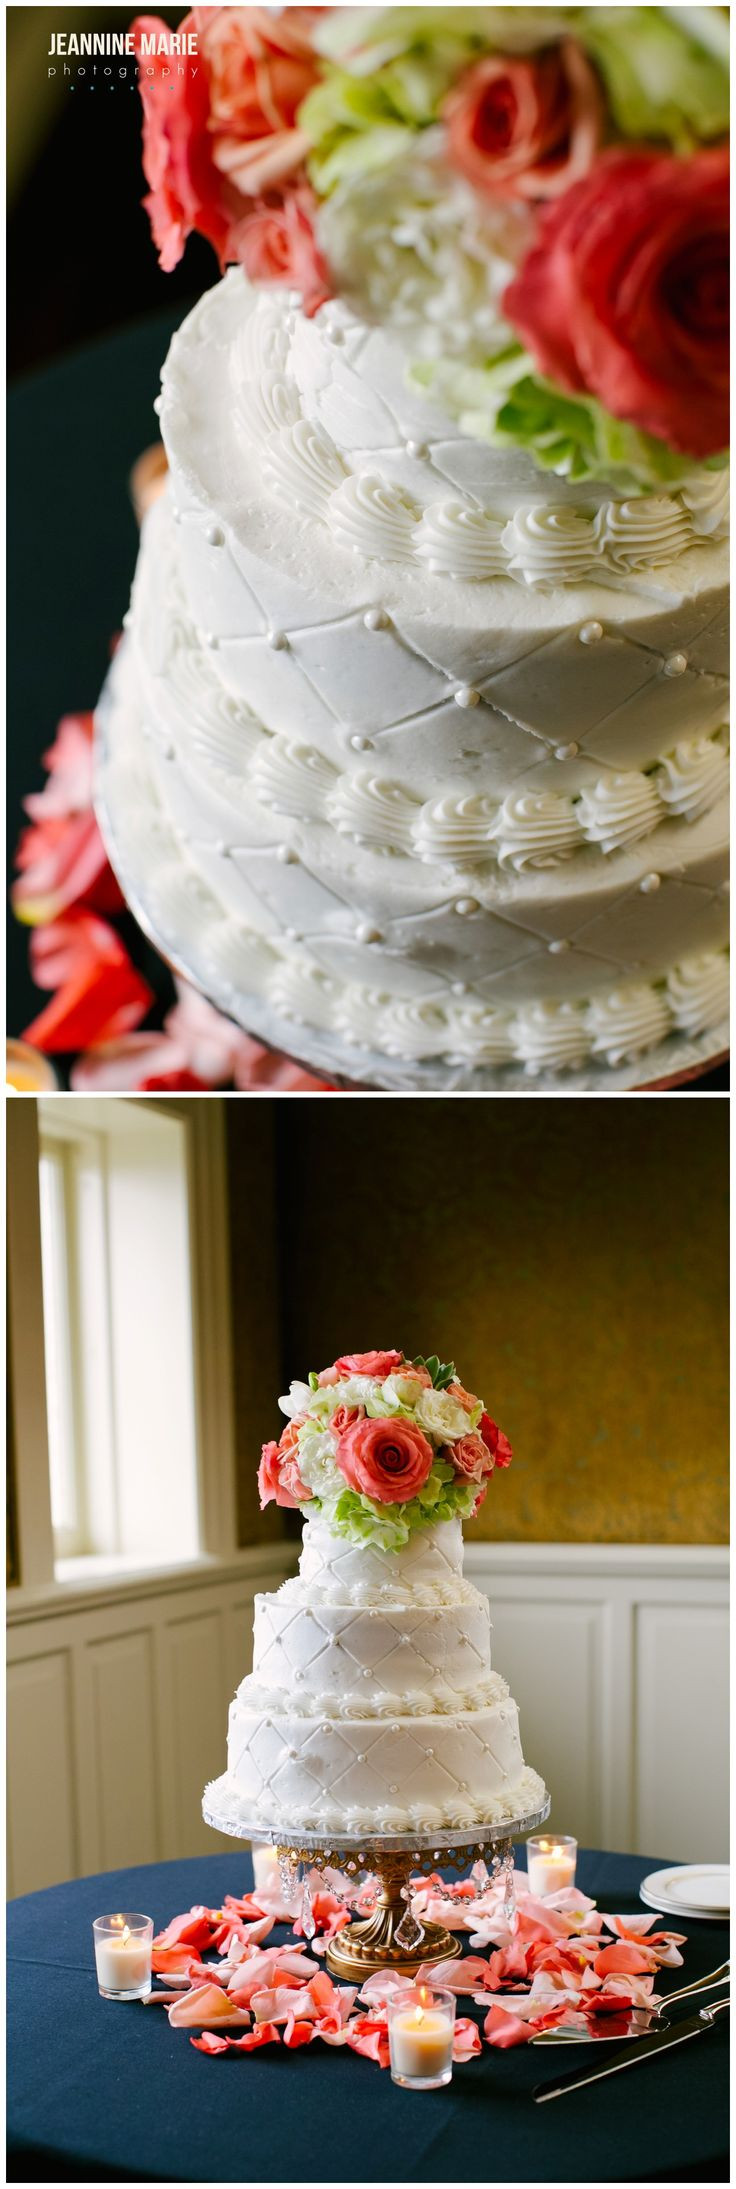 Samsclub Wedding Cakes
 The 25 best Sams club wedding cake ideas on Pinterest